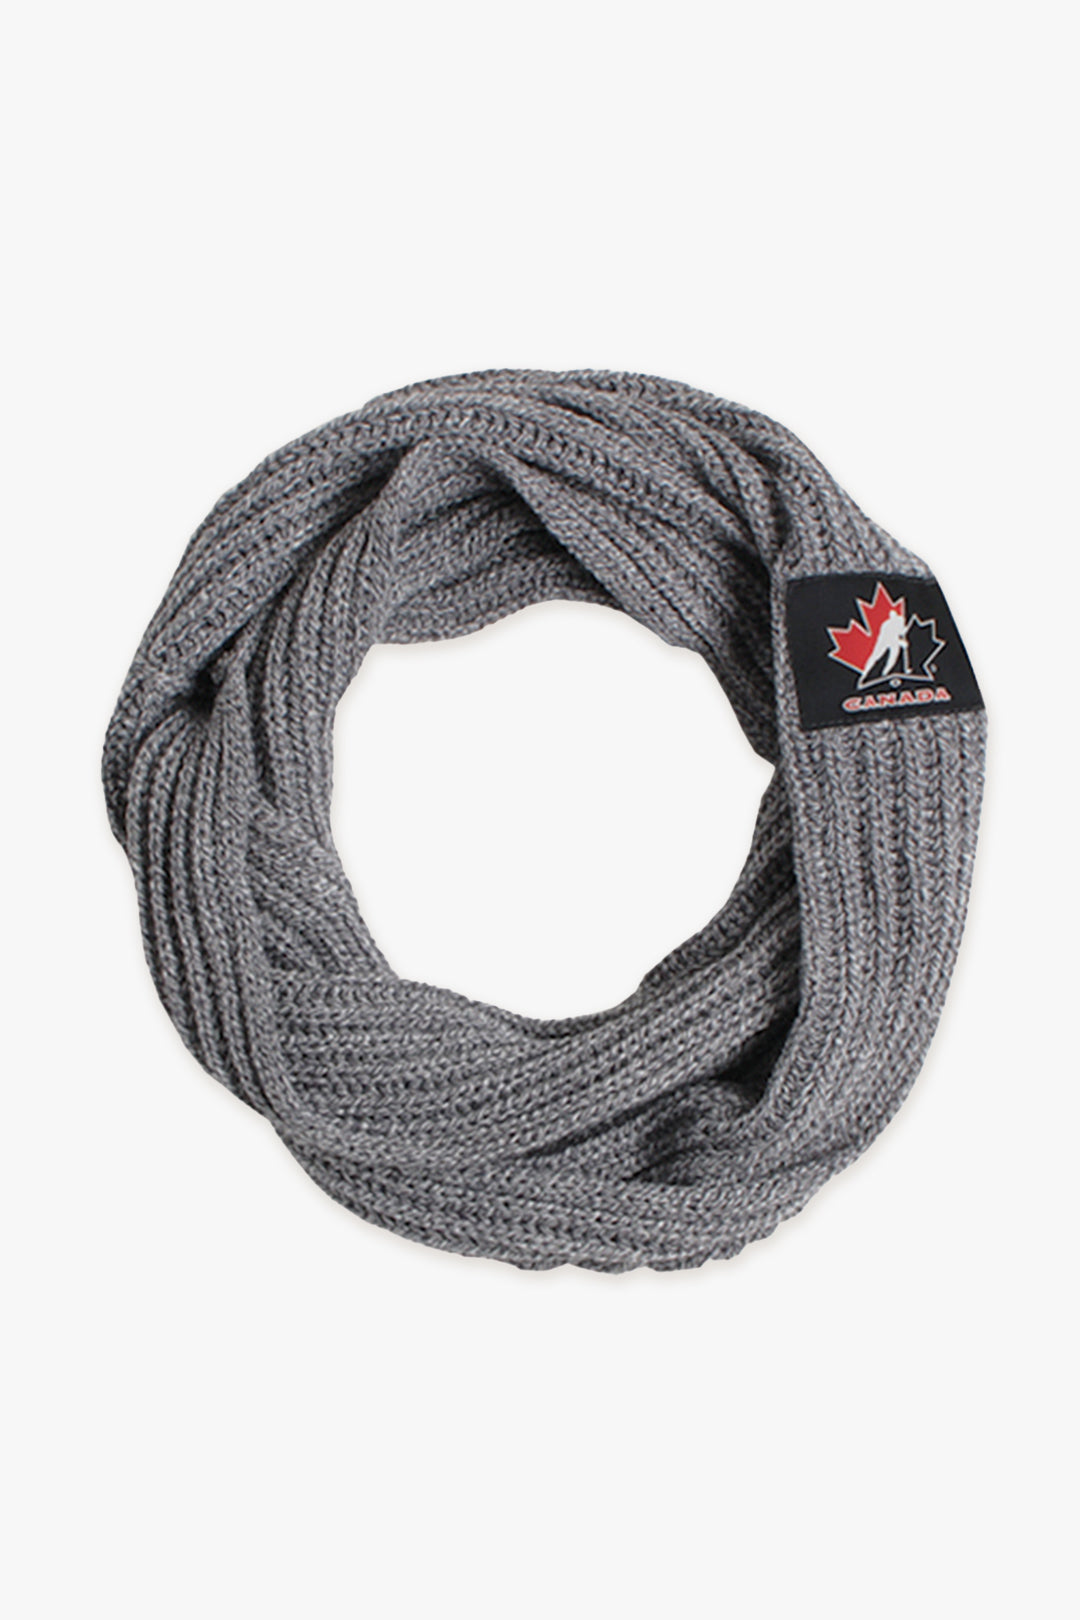 Gertex Hockey Canada Ladies Knit Infinity Scarf